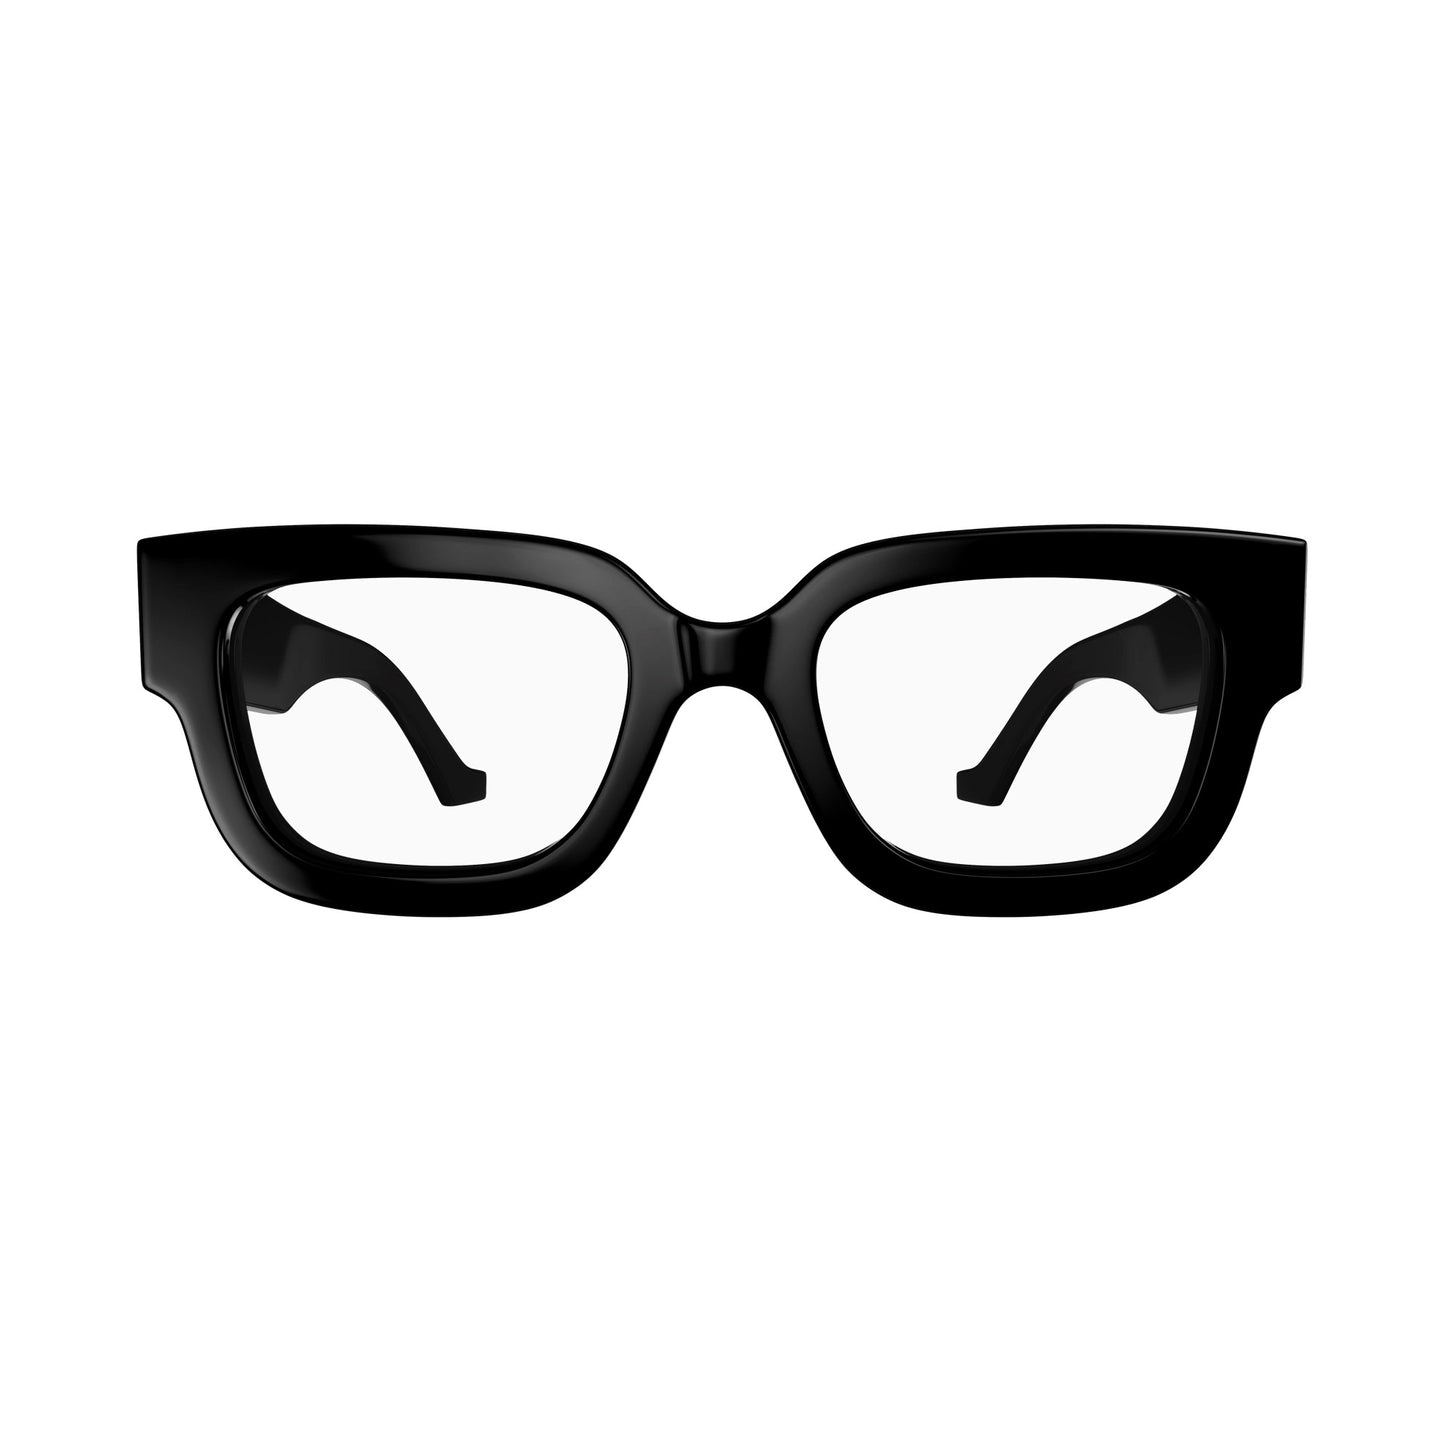 Gucci GG1548o-001 50mm New Eyeglasses